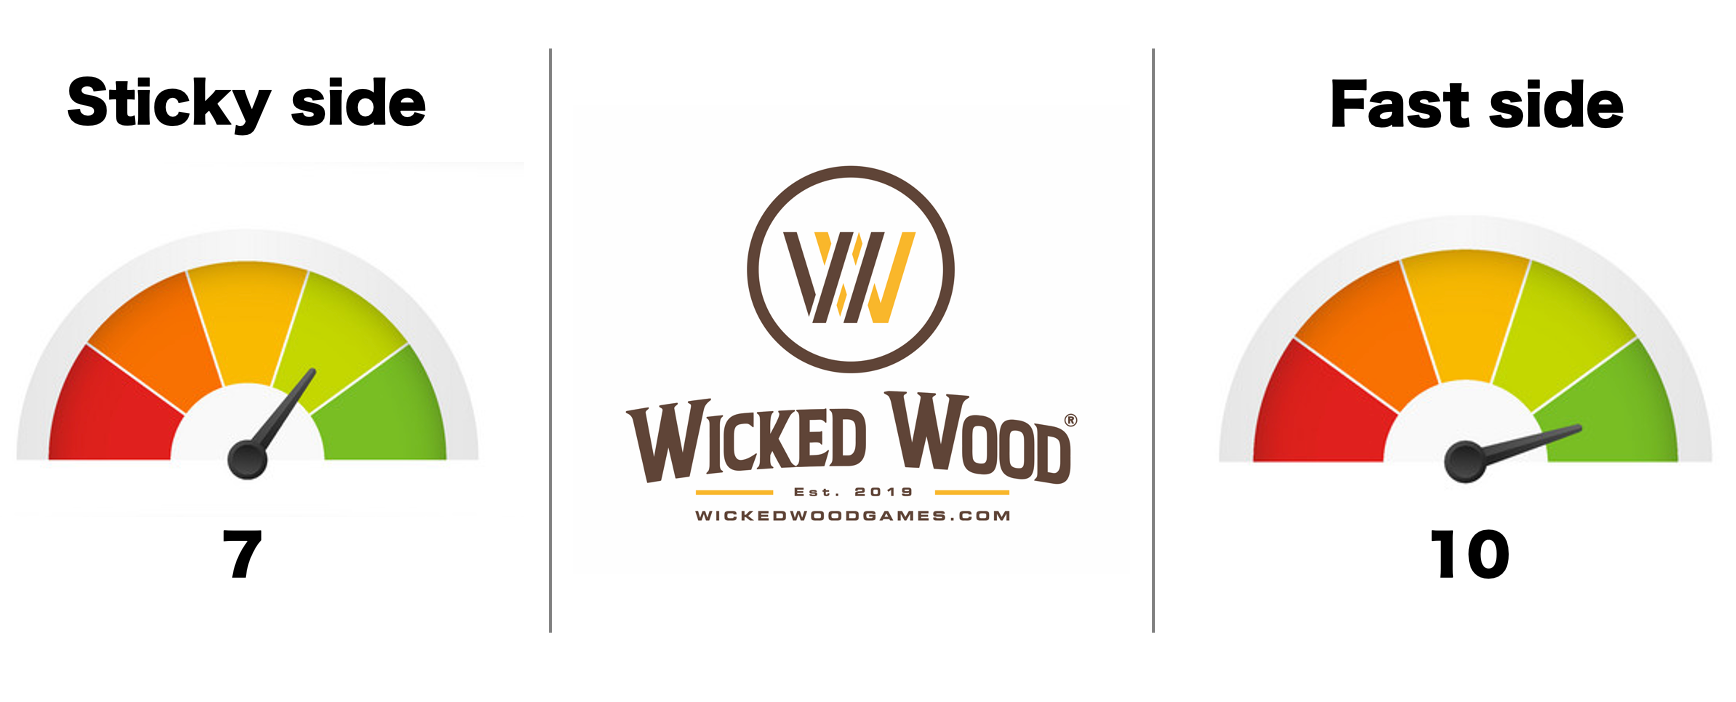 Wicked Wood Pro Väskor - GameChanger 1x4 Cornhole Väskor - Wicked Wood Games